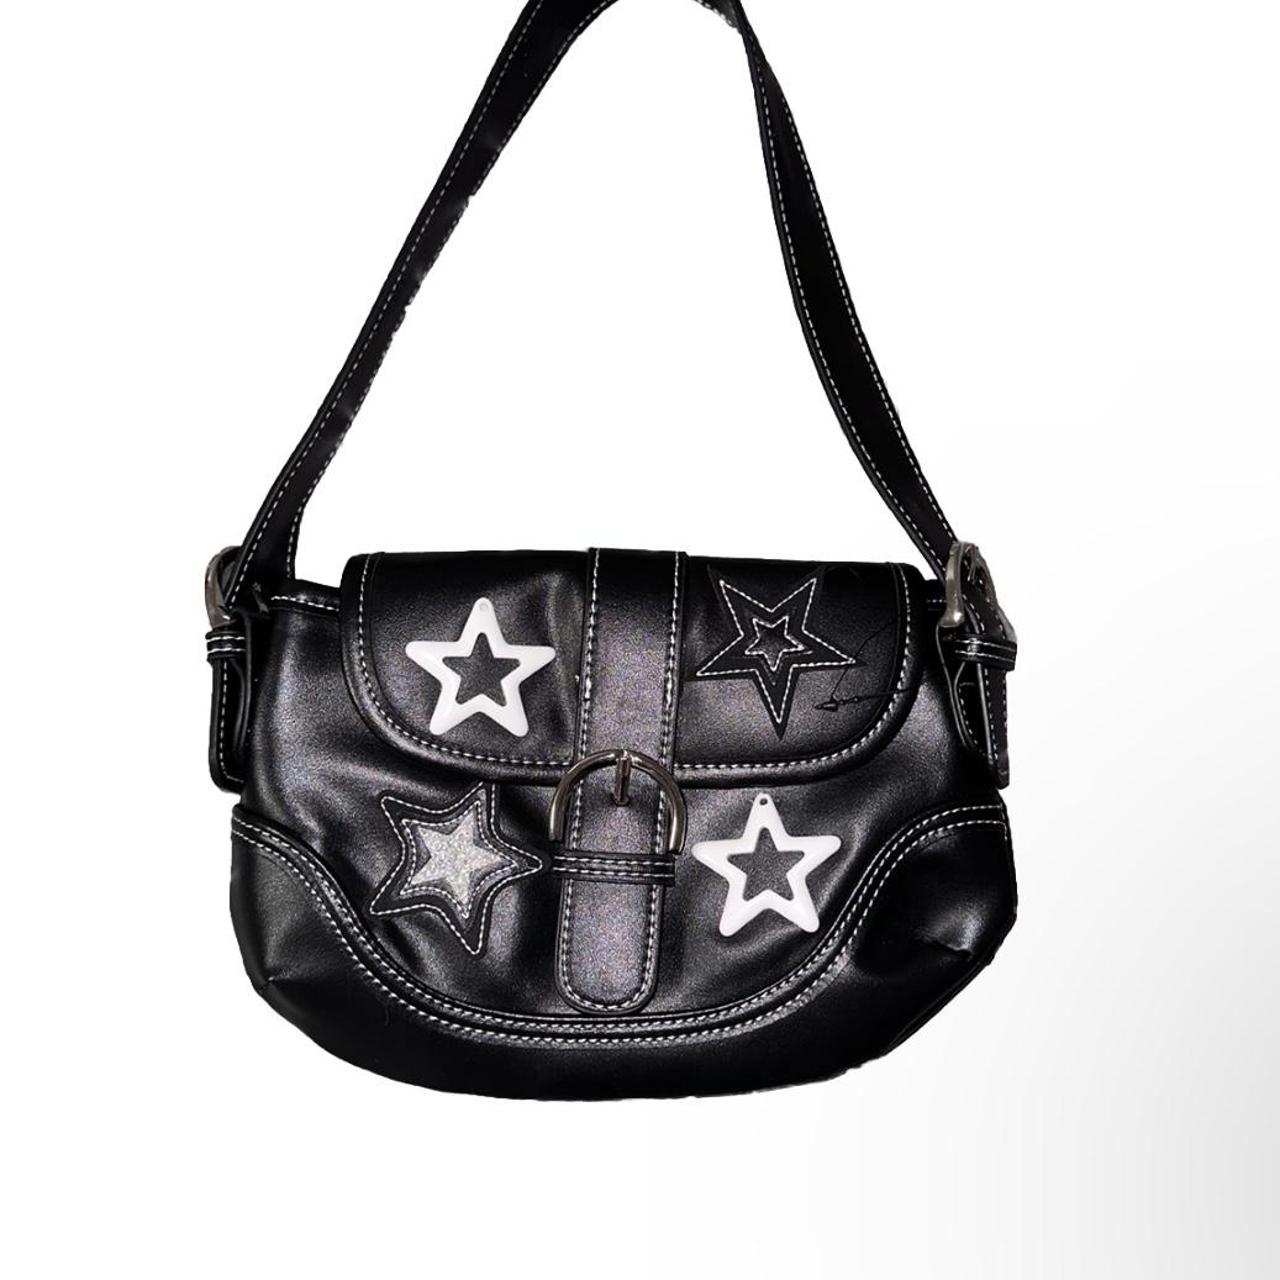 star bag in black - Depop